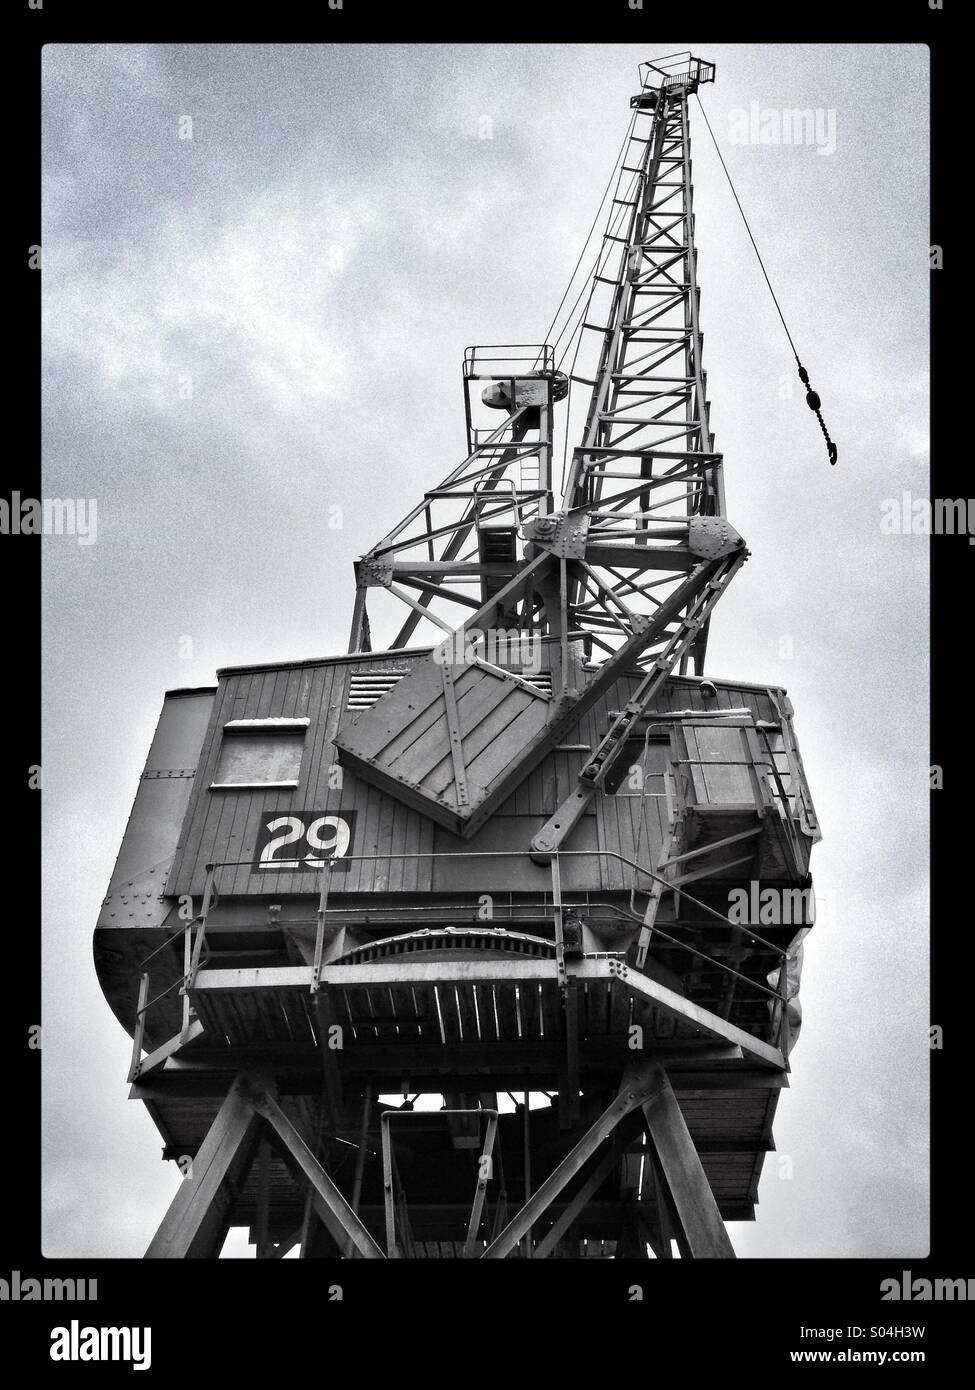 Bristol Waterfront crane Stock Photo - Alamy